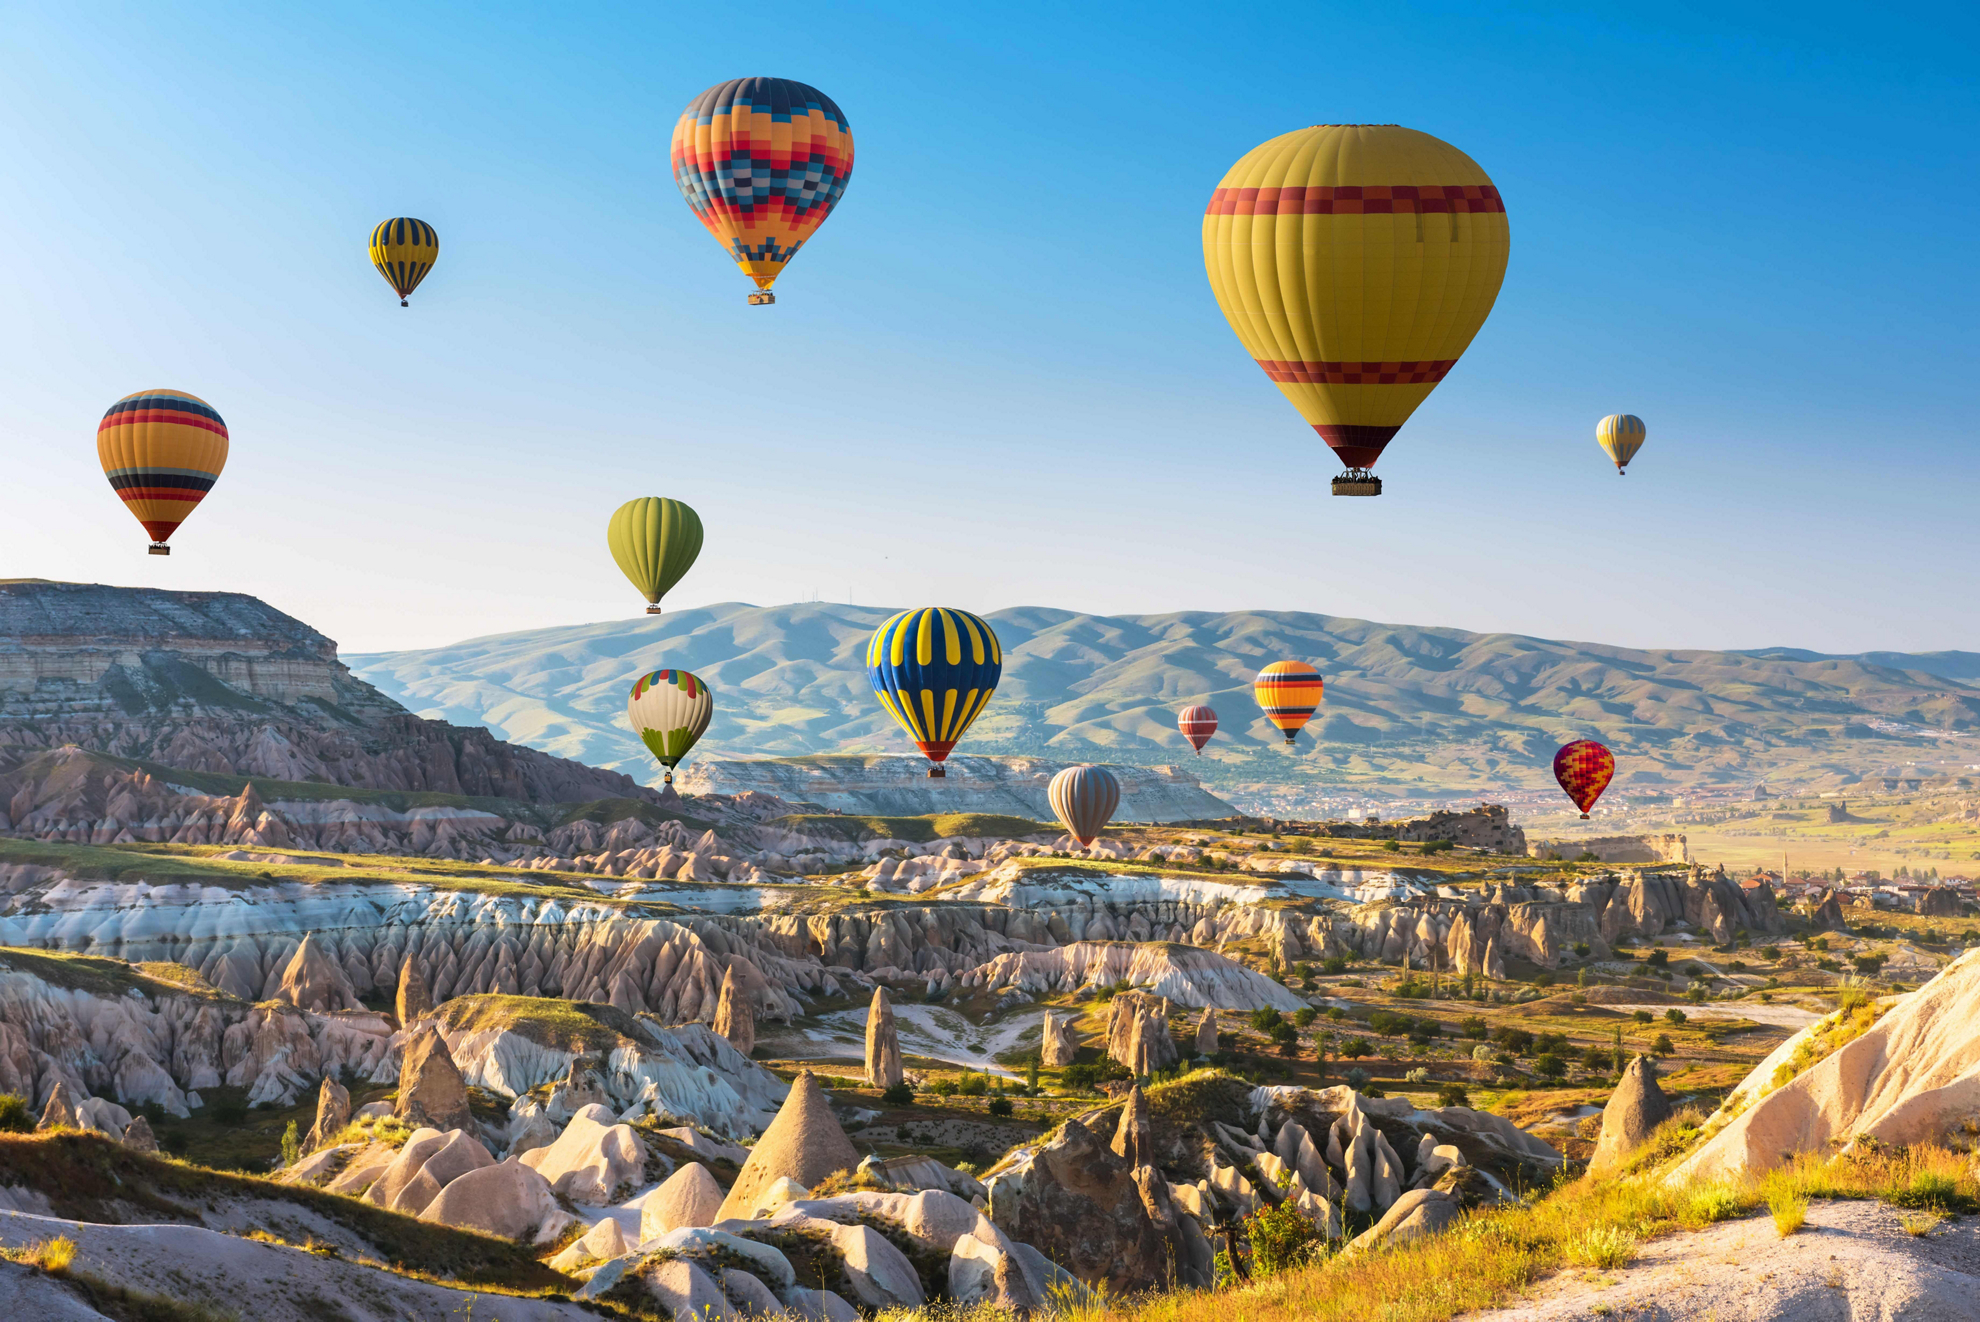 Things to do in Cappadocia: Hot air balloons floating above Cappadocia